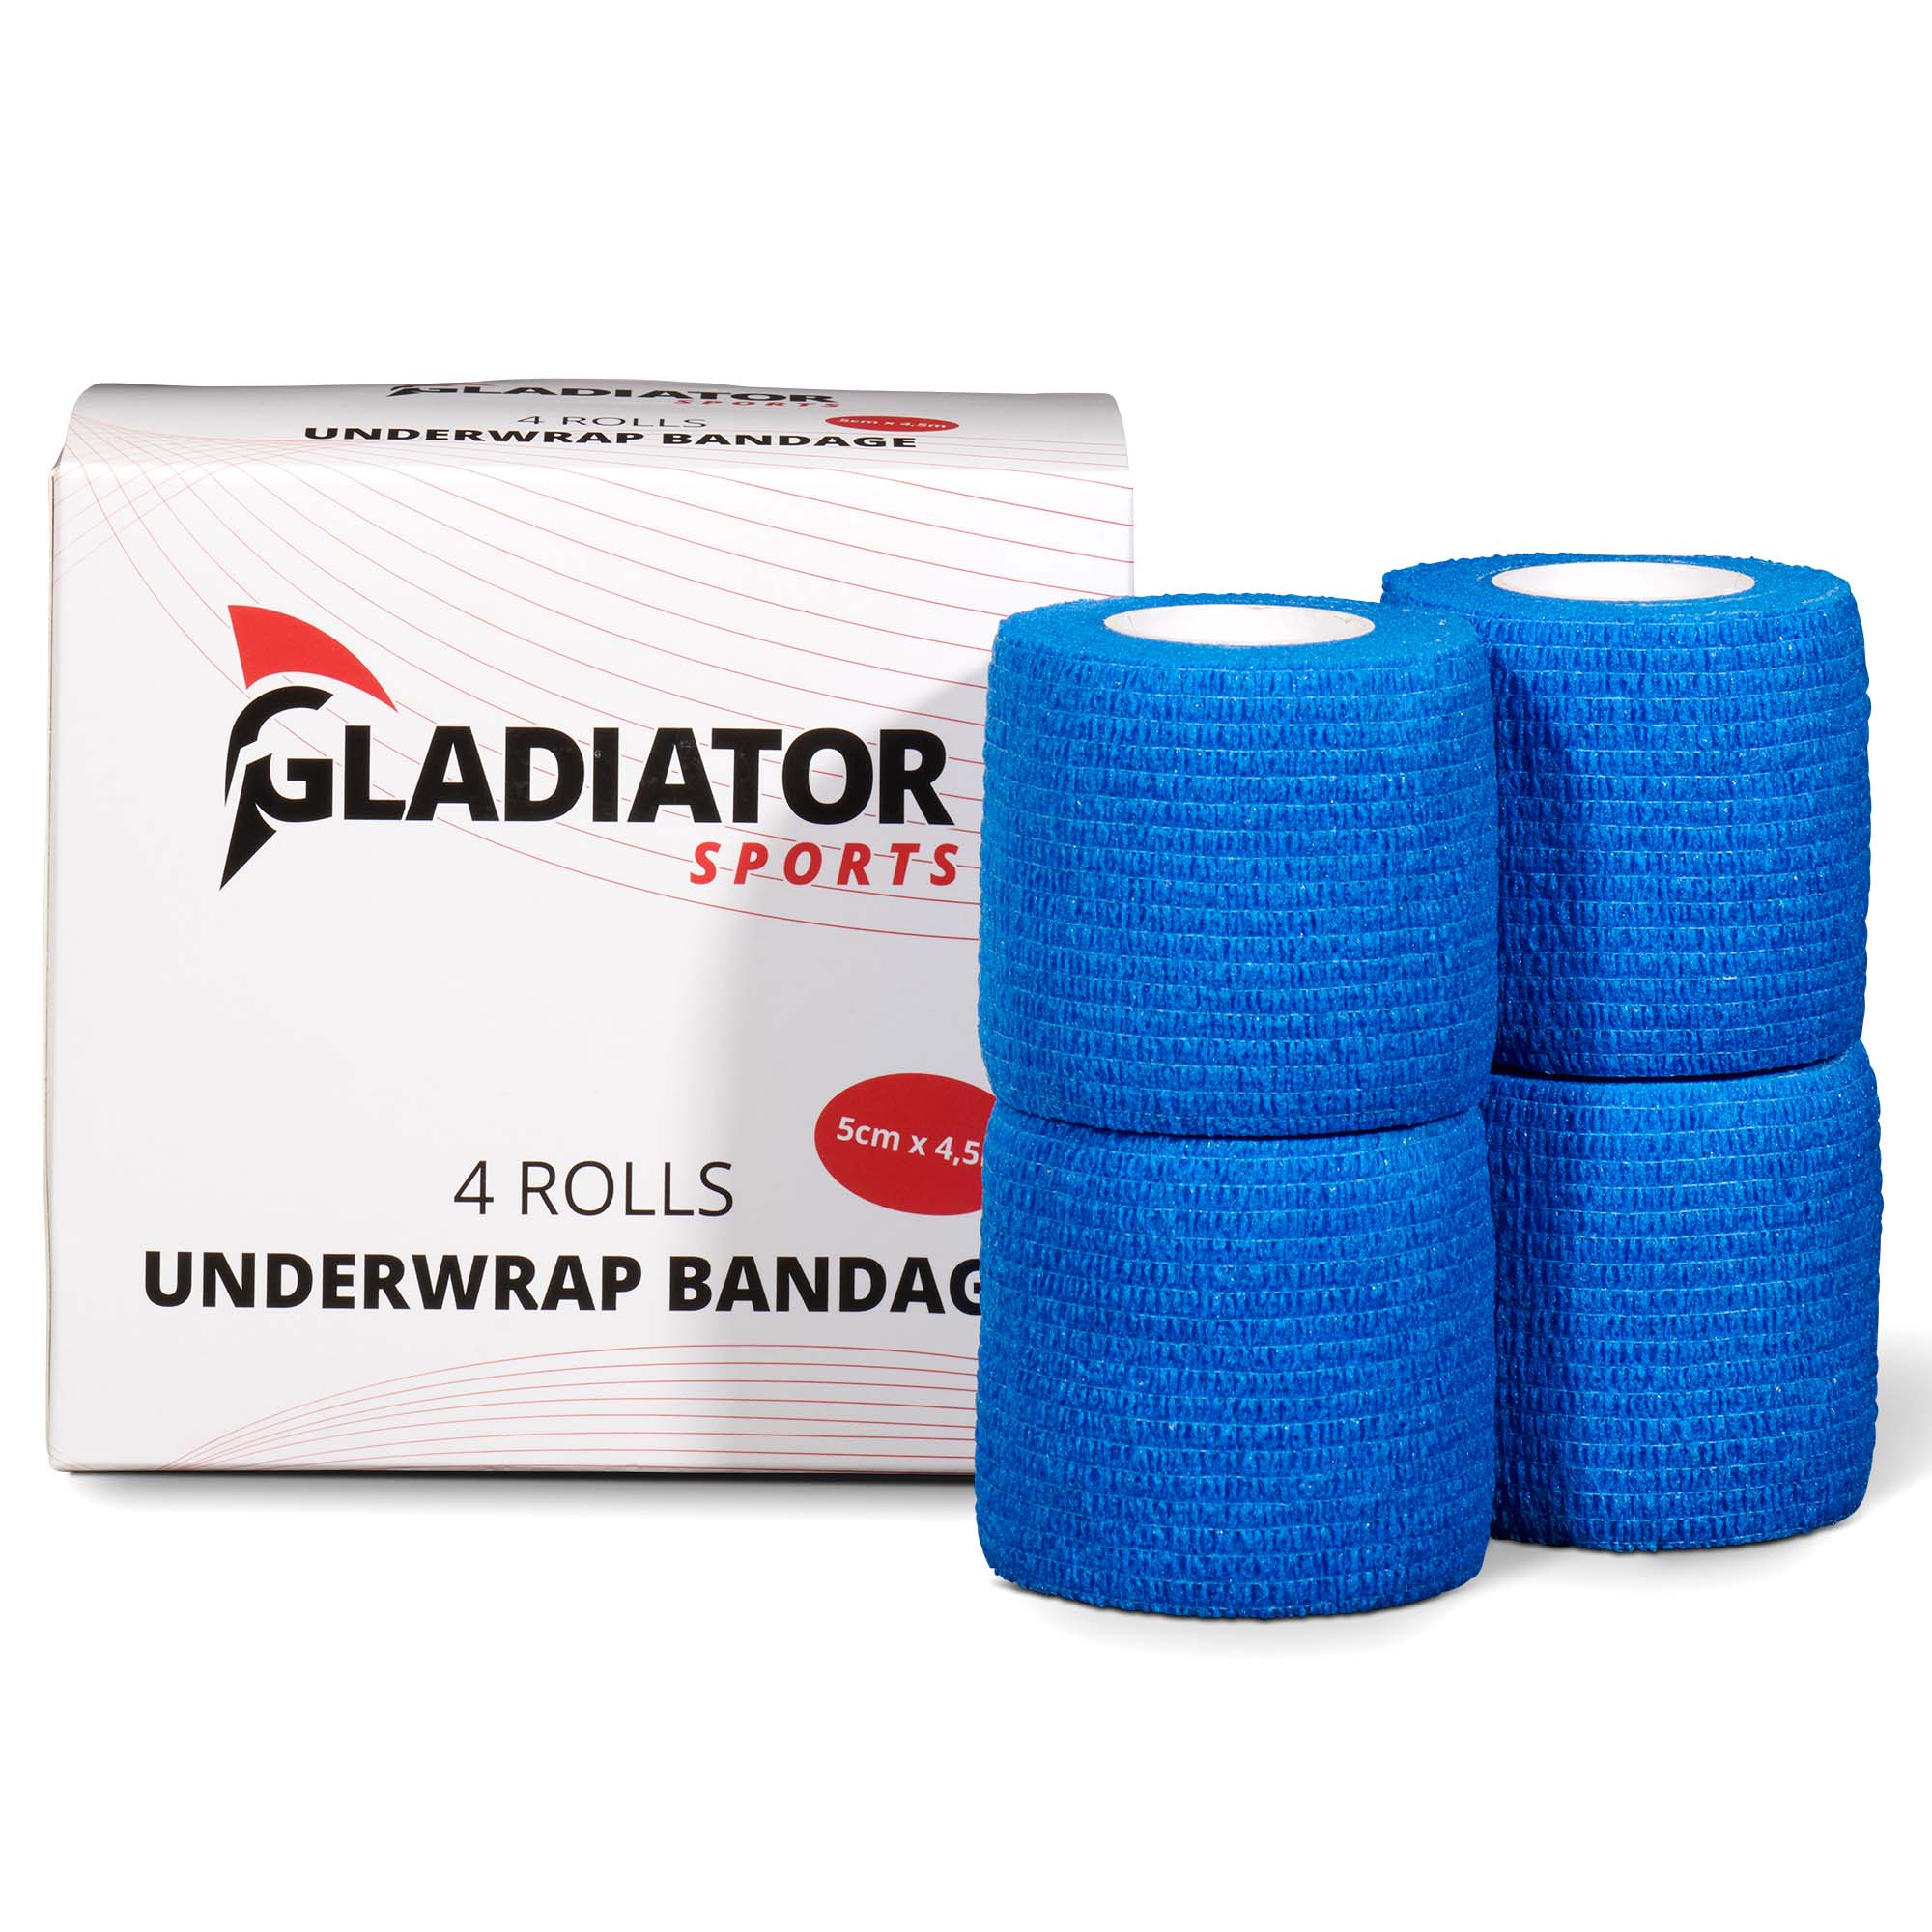 Gladiator Sports underwrap bandage per 4 rolls blue with box